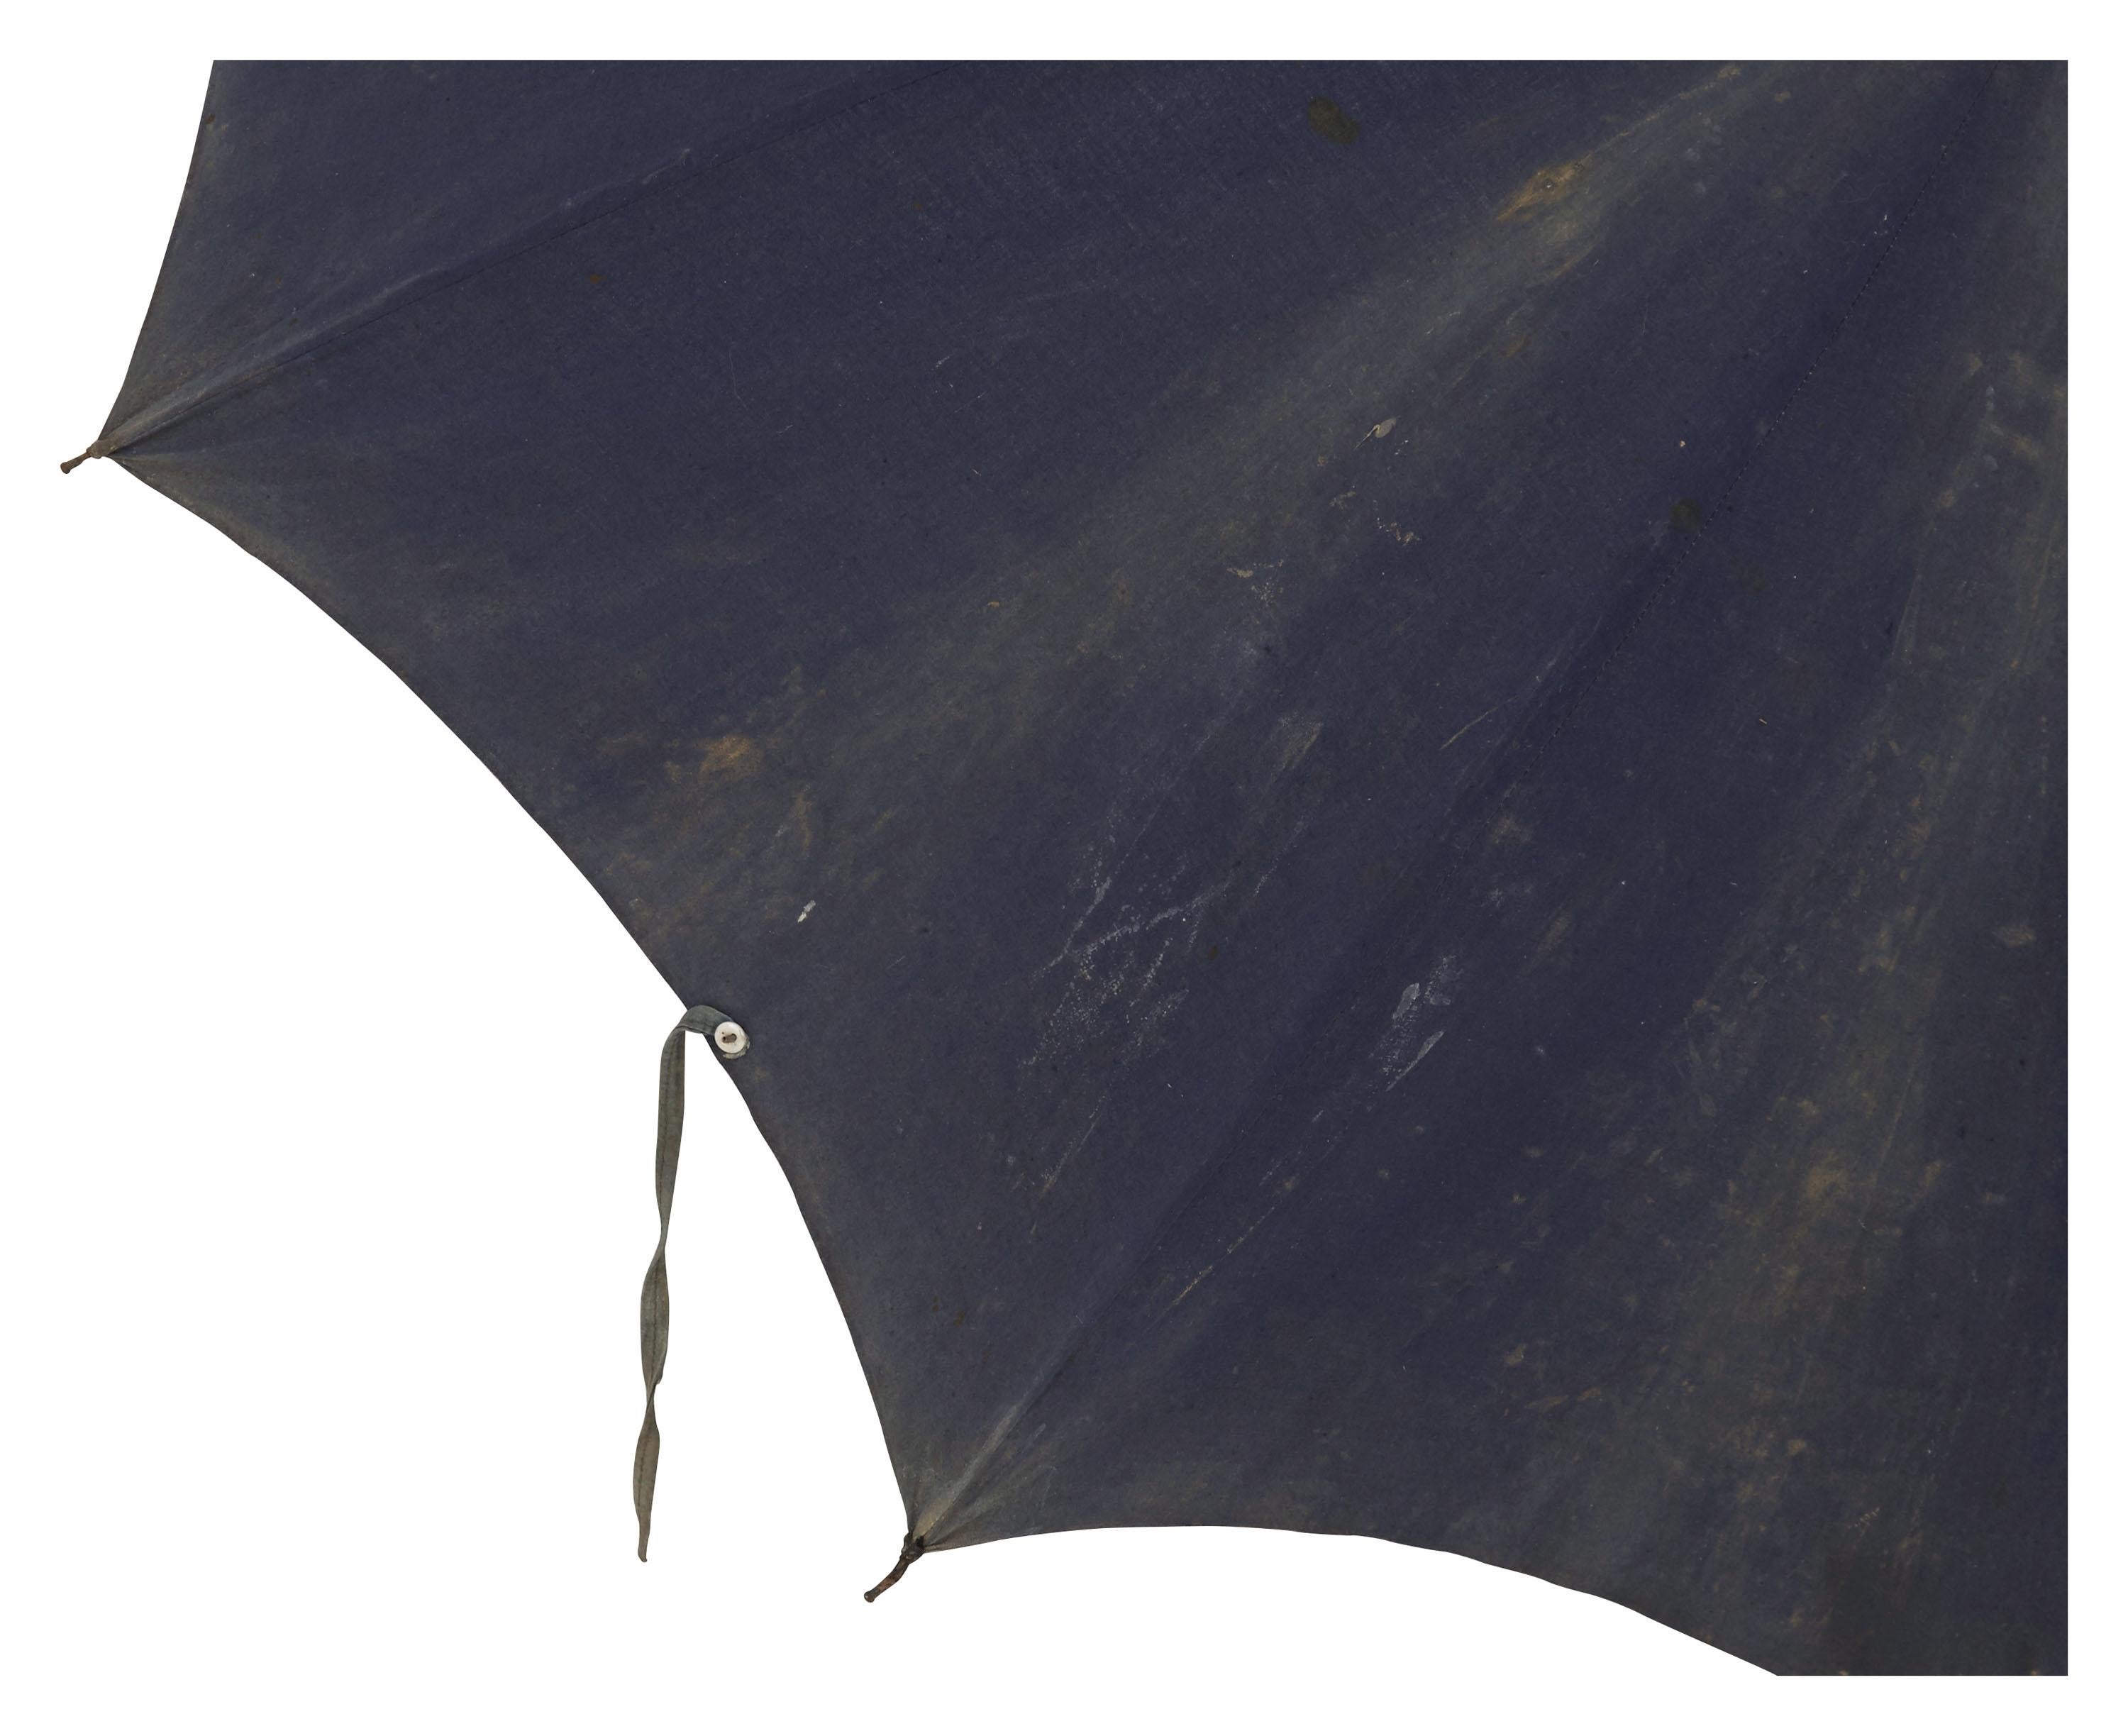 Dyed Early 20th Century Indigo Canvas Umbrella For Sale